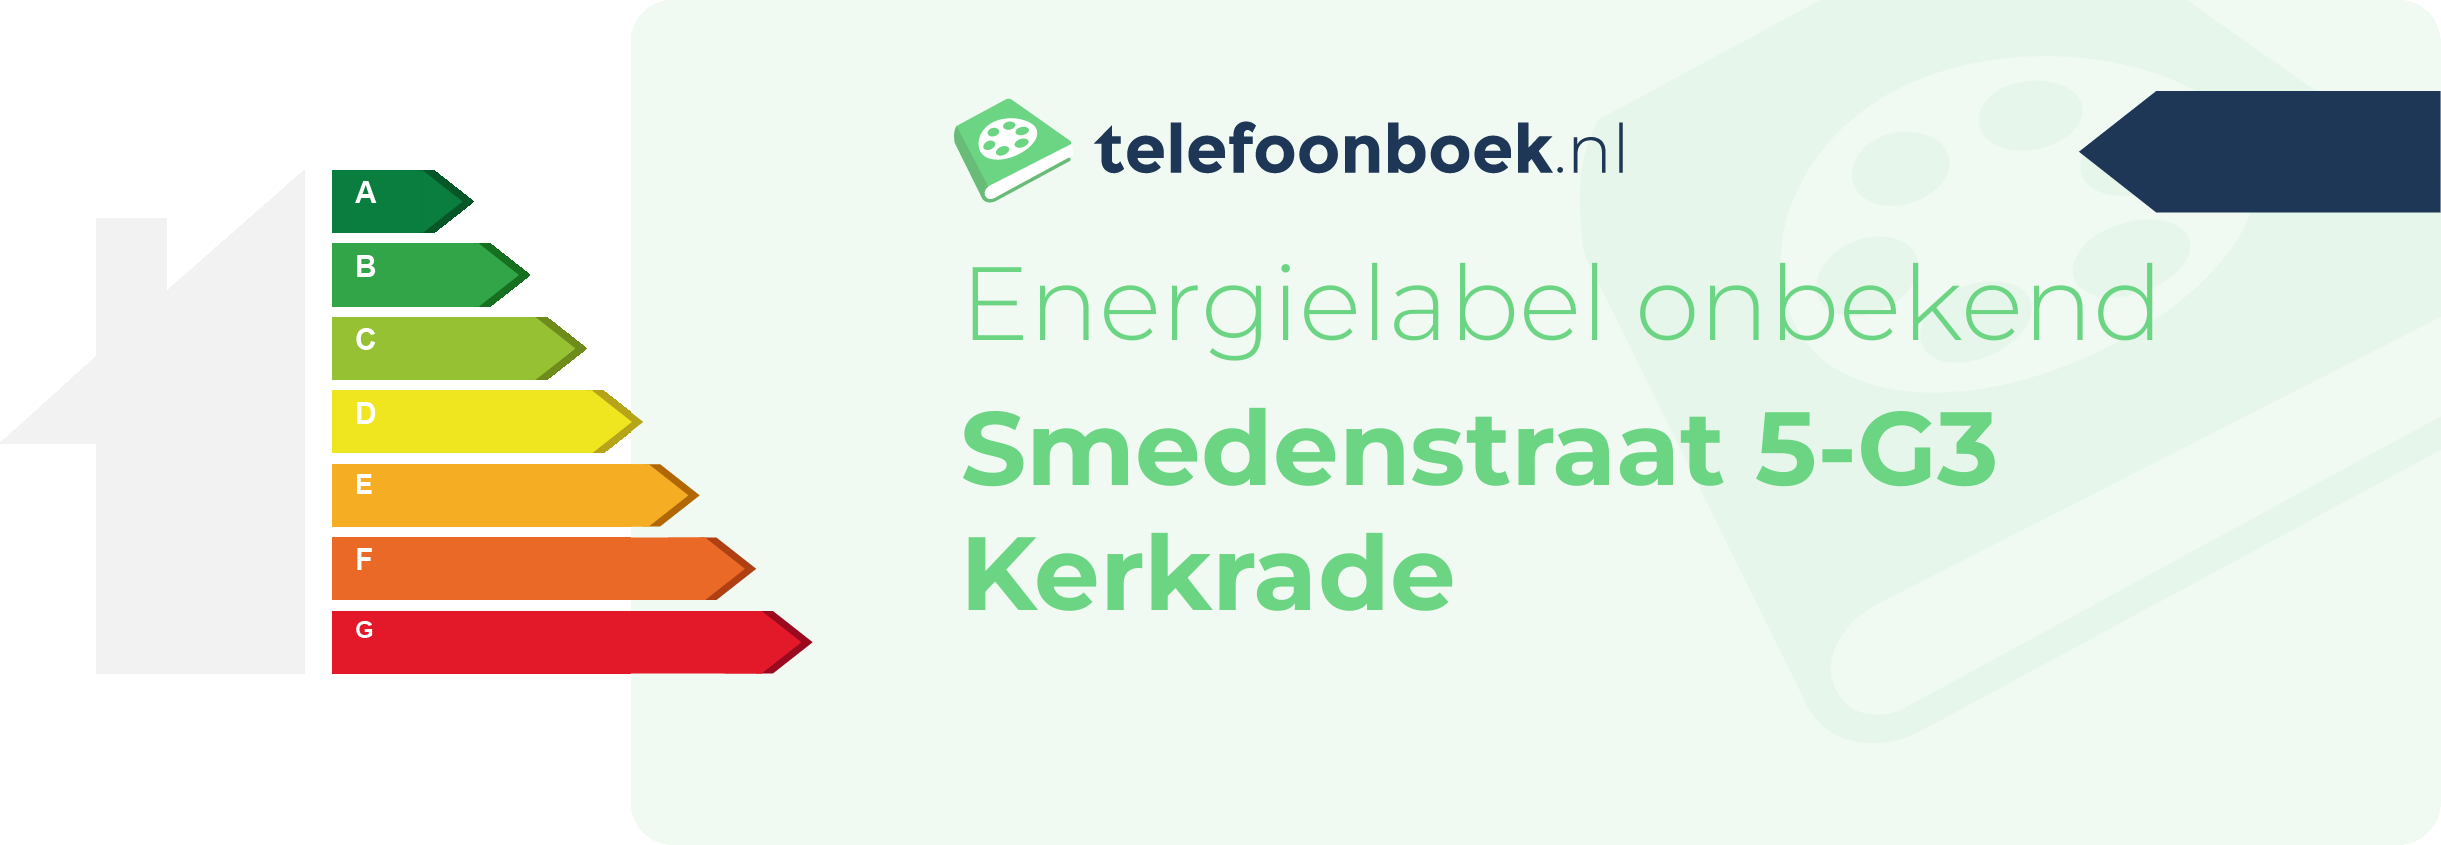 Energielabel Smedenstraat 5-G3 Kerkrade